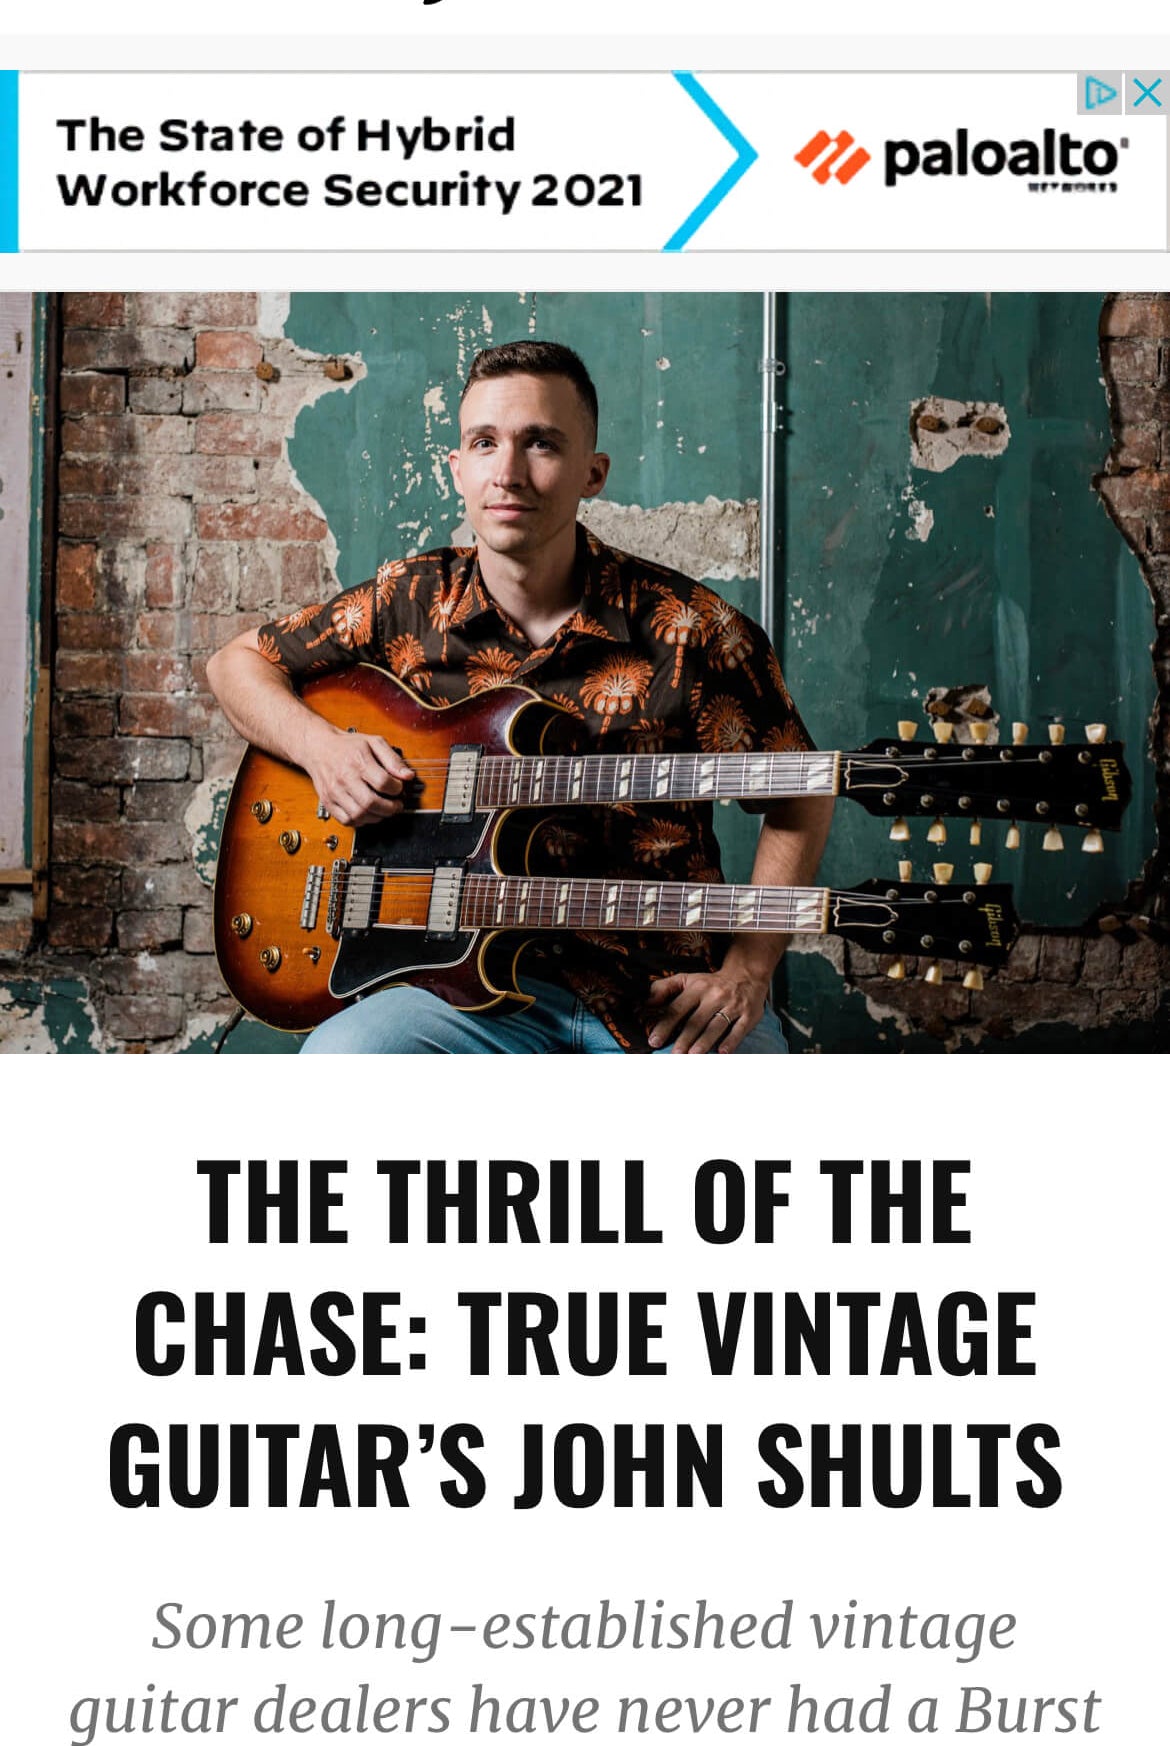 Guitar Magazine Interview with John of True Vintage Guitar